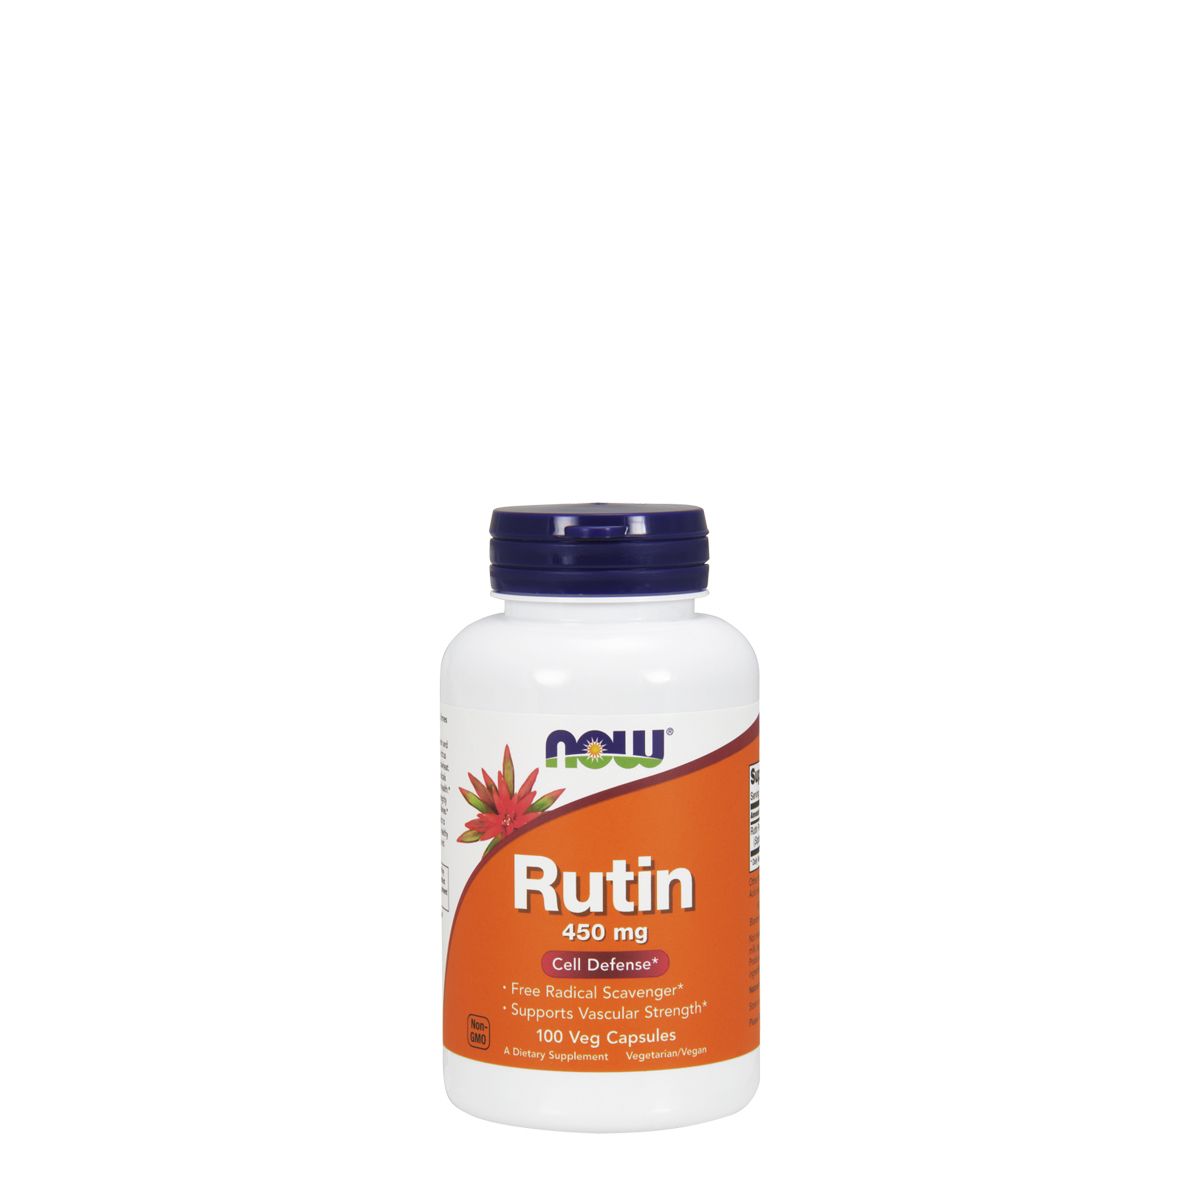 Sejtvédő rutin 450 mg, Now Rutin Cell Defense, 100 kapszula